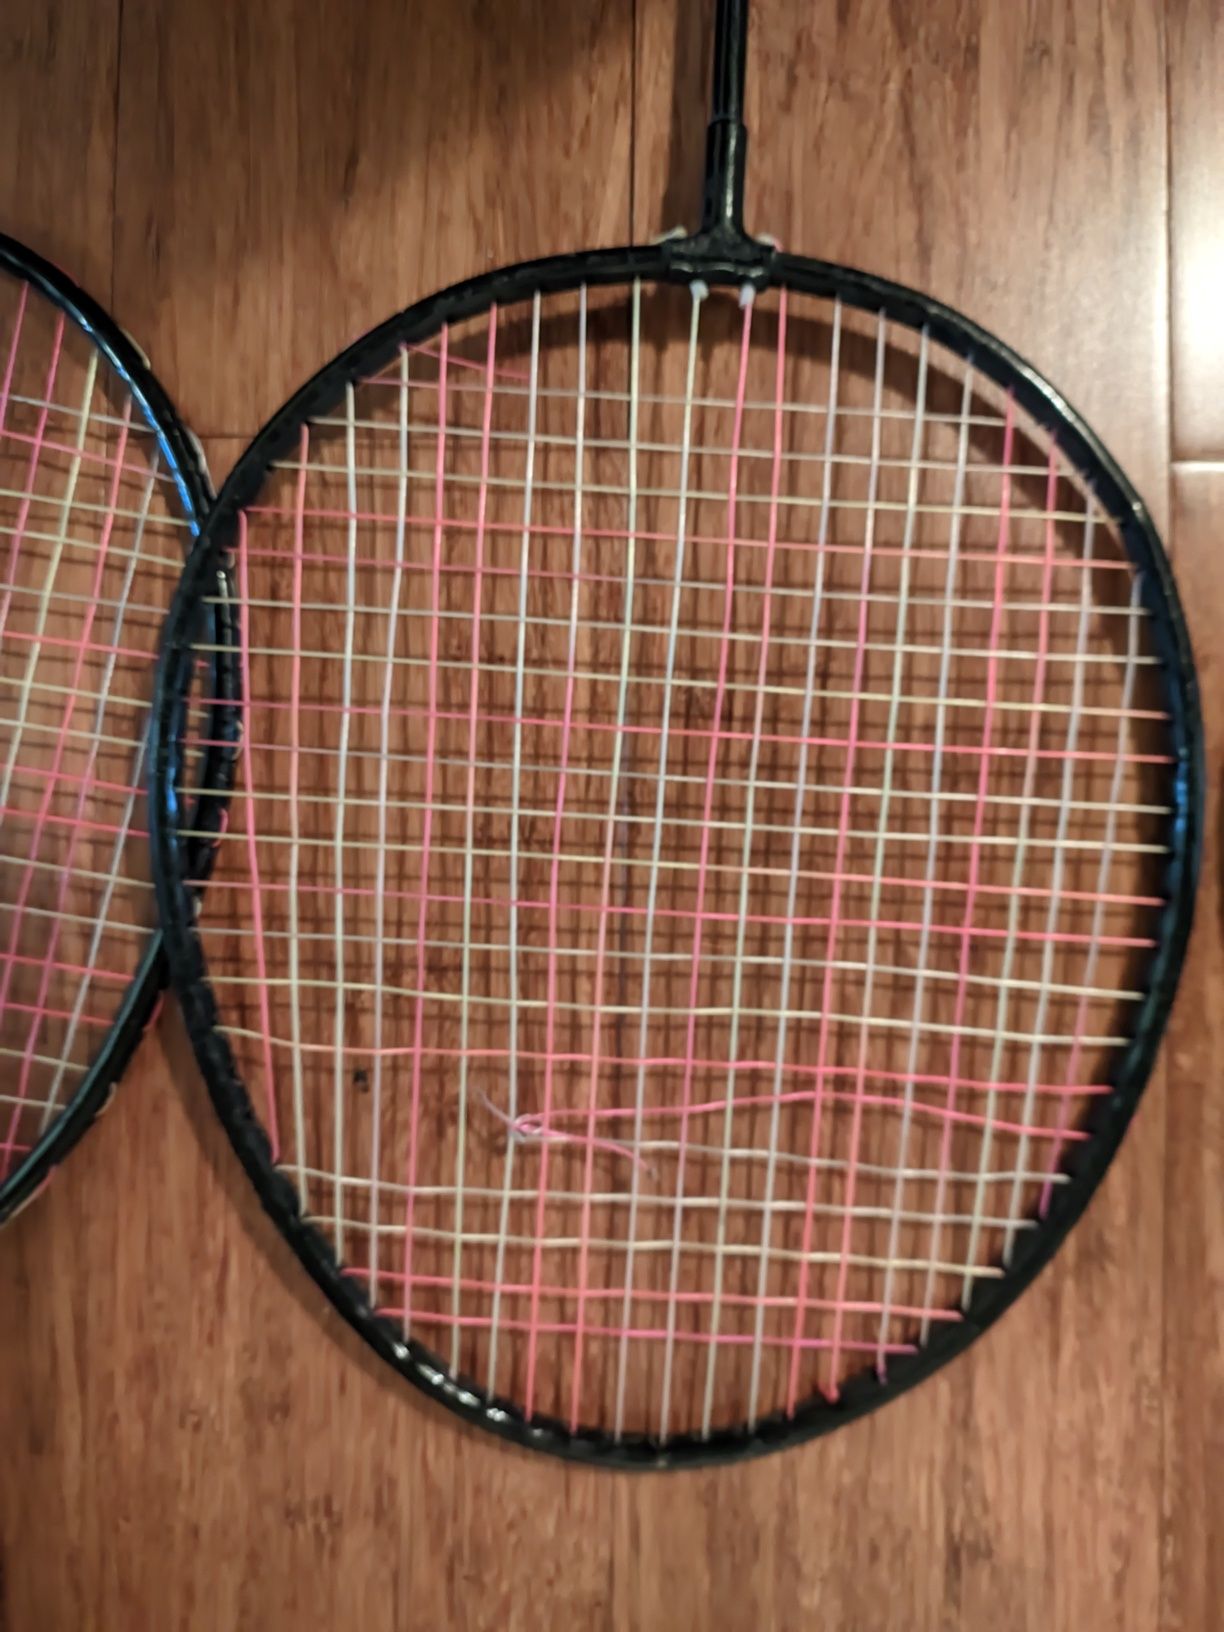 Rakietki paletki do badmintona